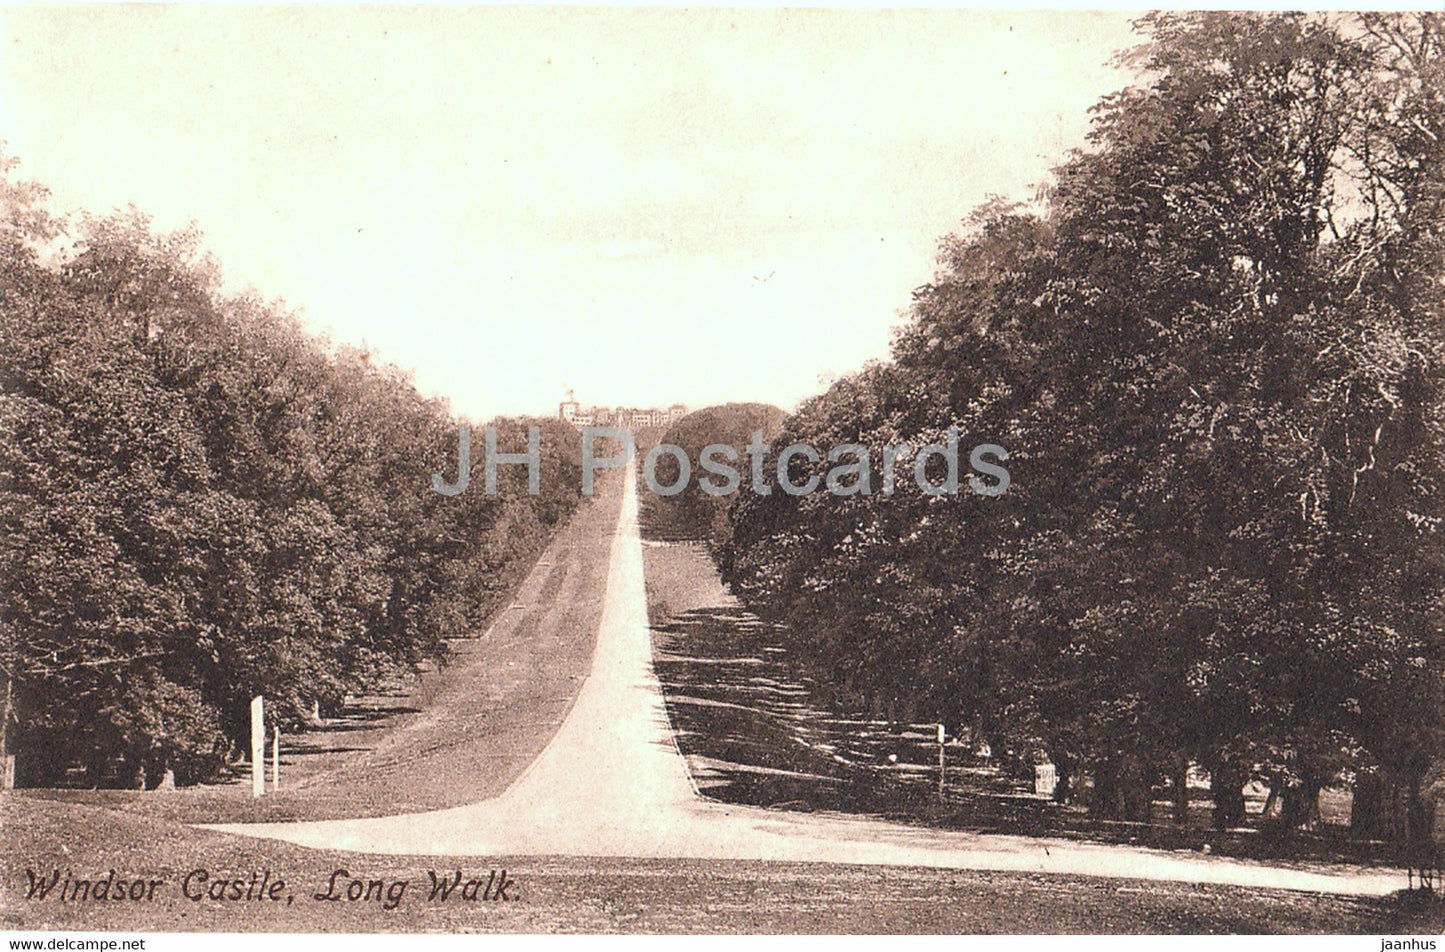 Windsor Castle - Long Walk - 35432 - old postcard - England - United Kingdom - unused - JH Postcards